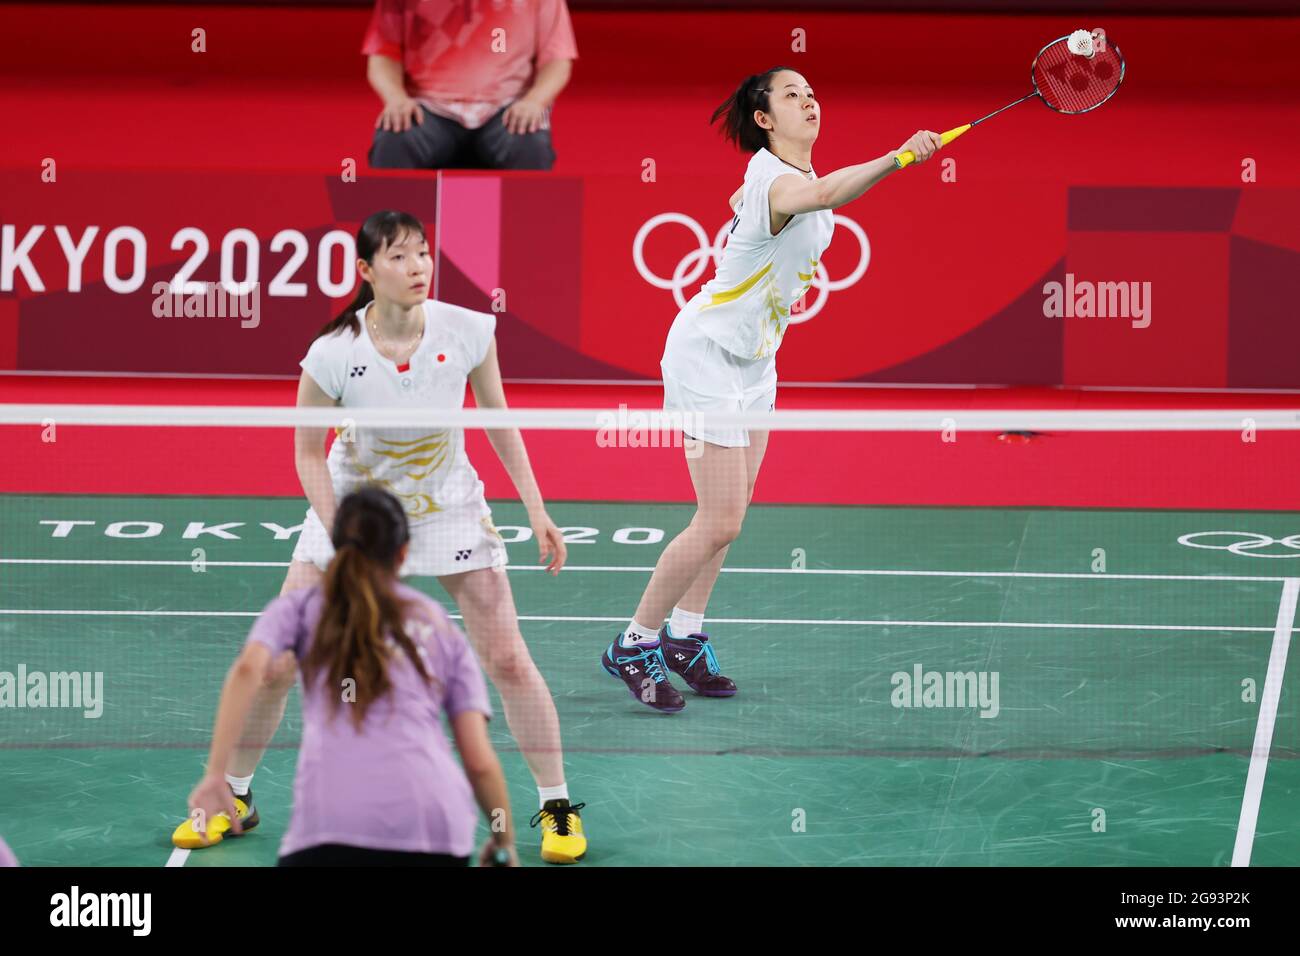 Olimpik tokyo 2020 badminton live